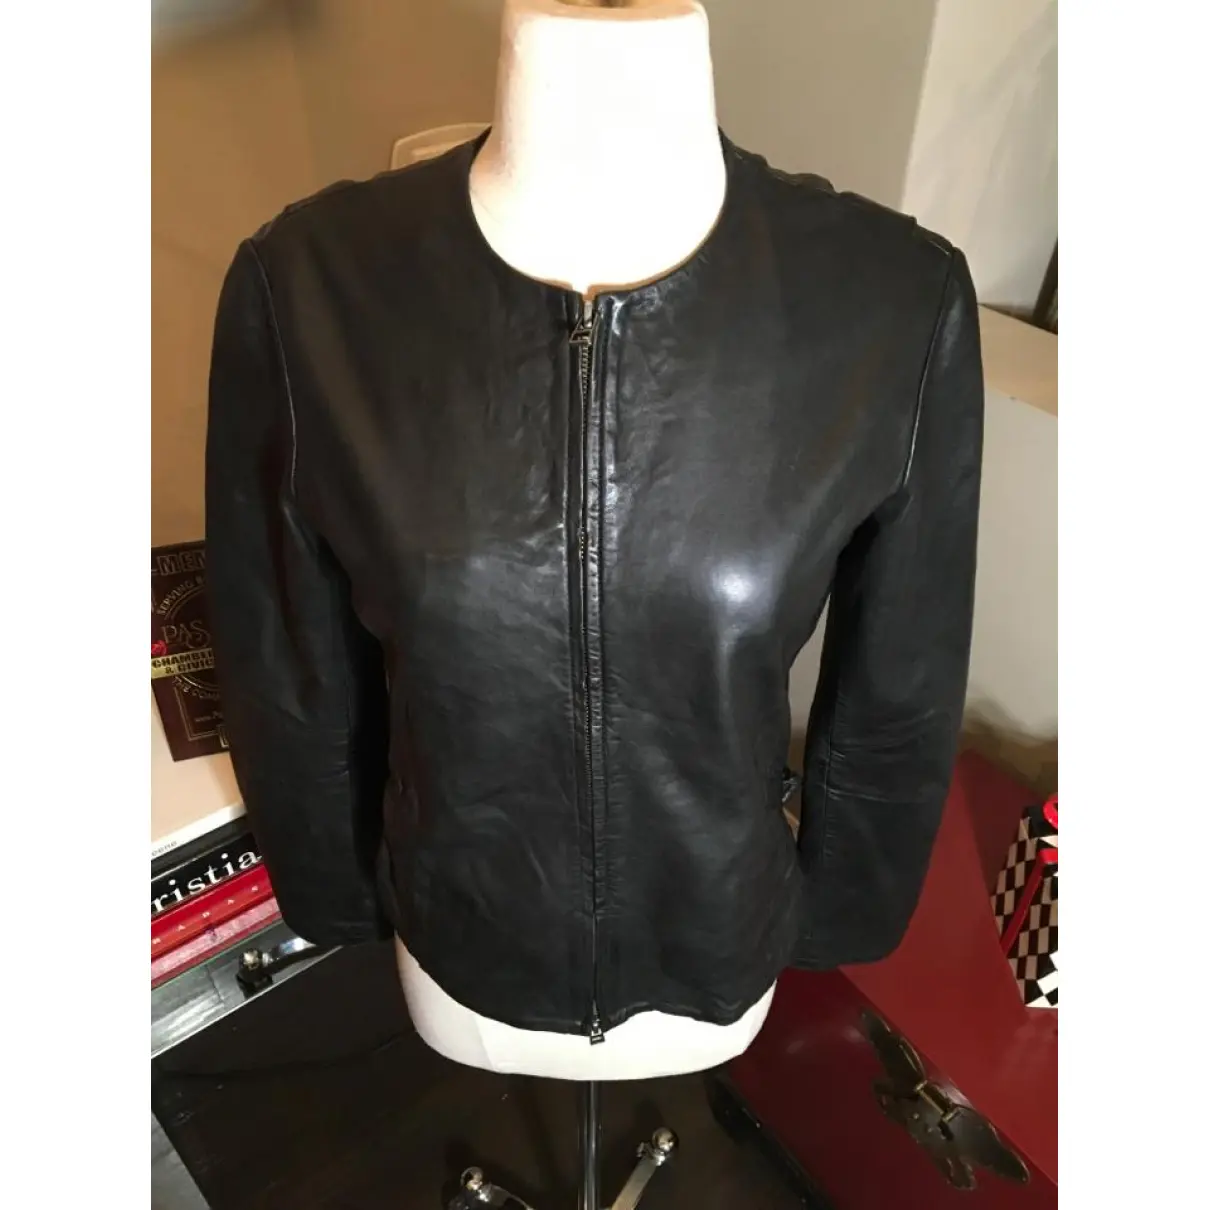 Buy Atm Leather jacket online